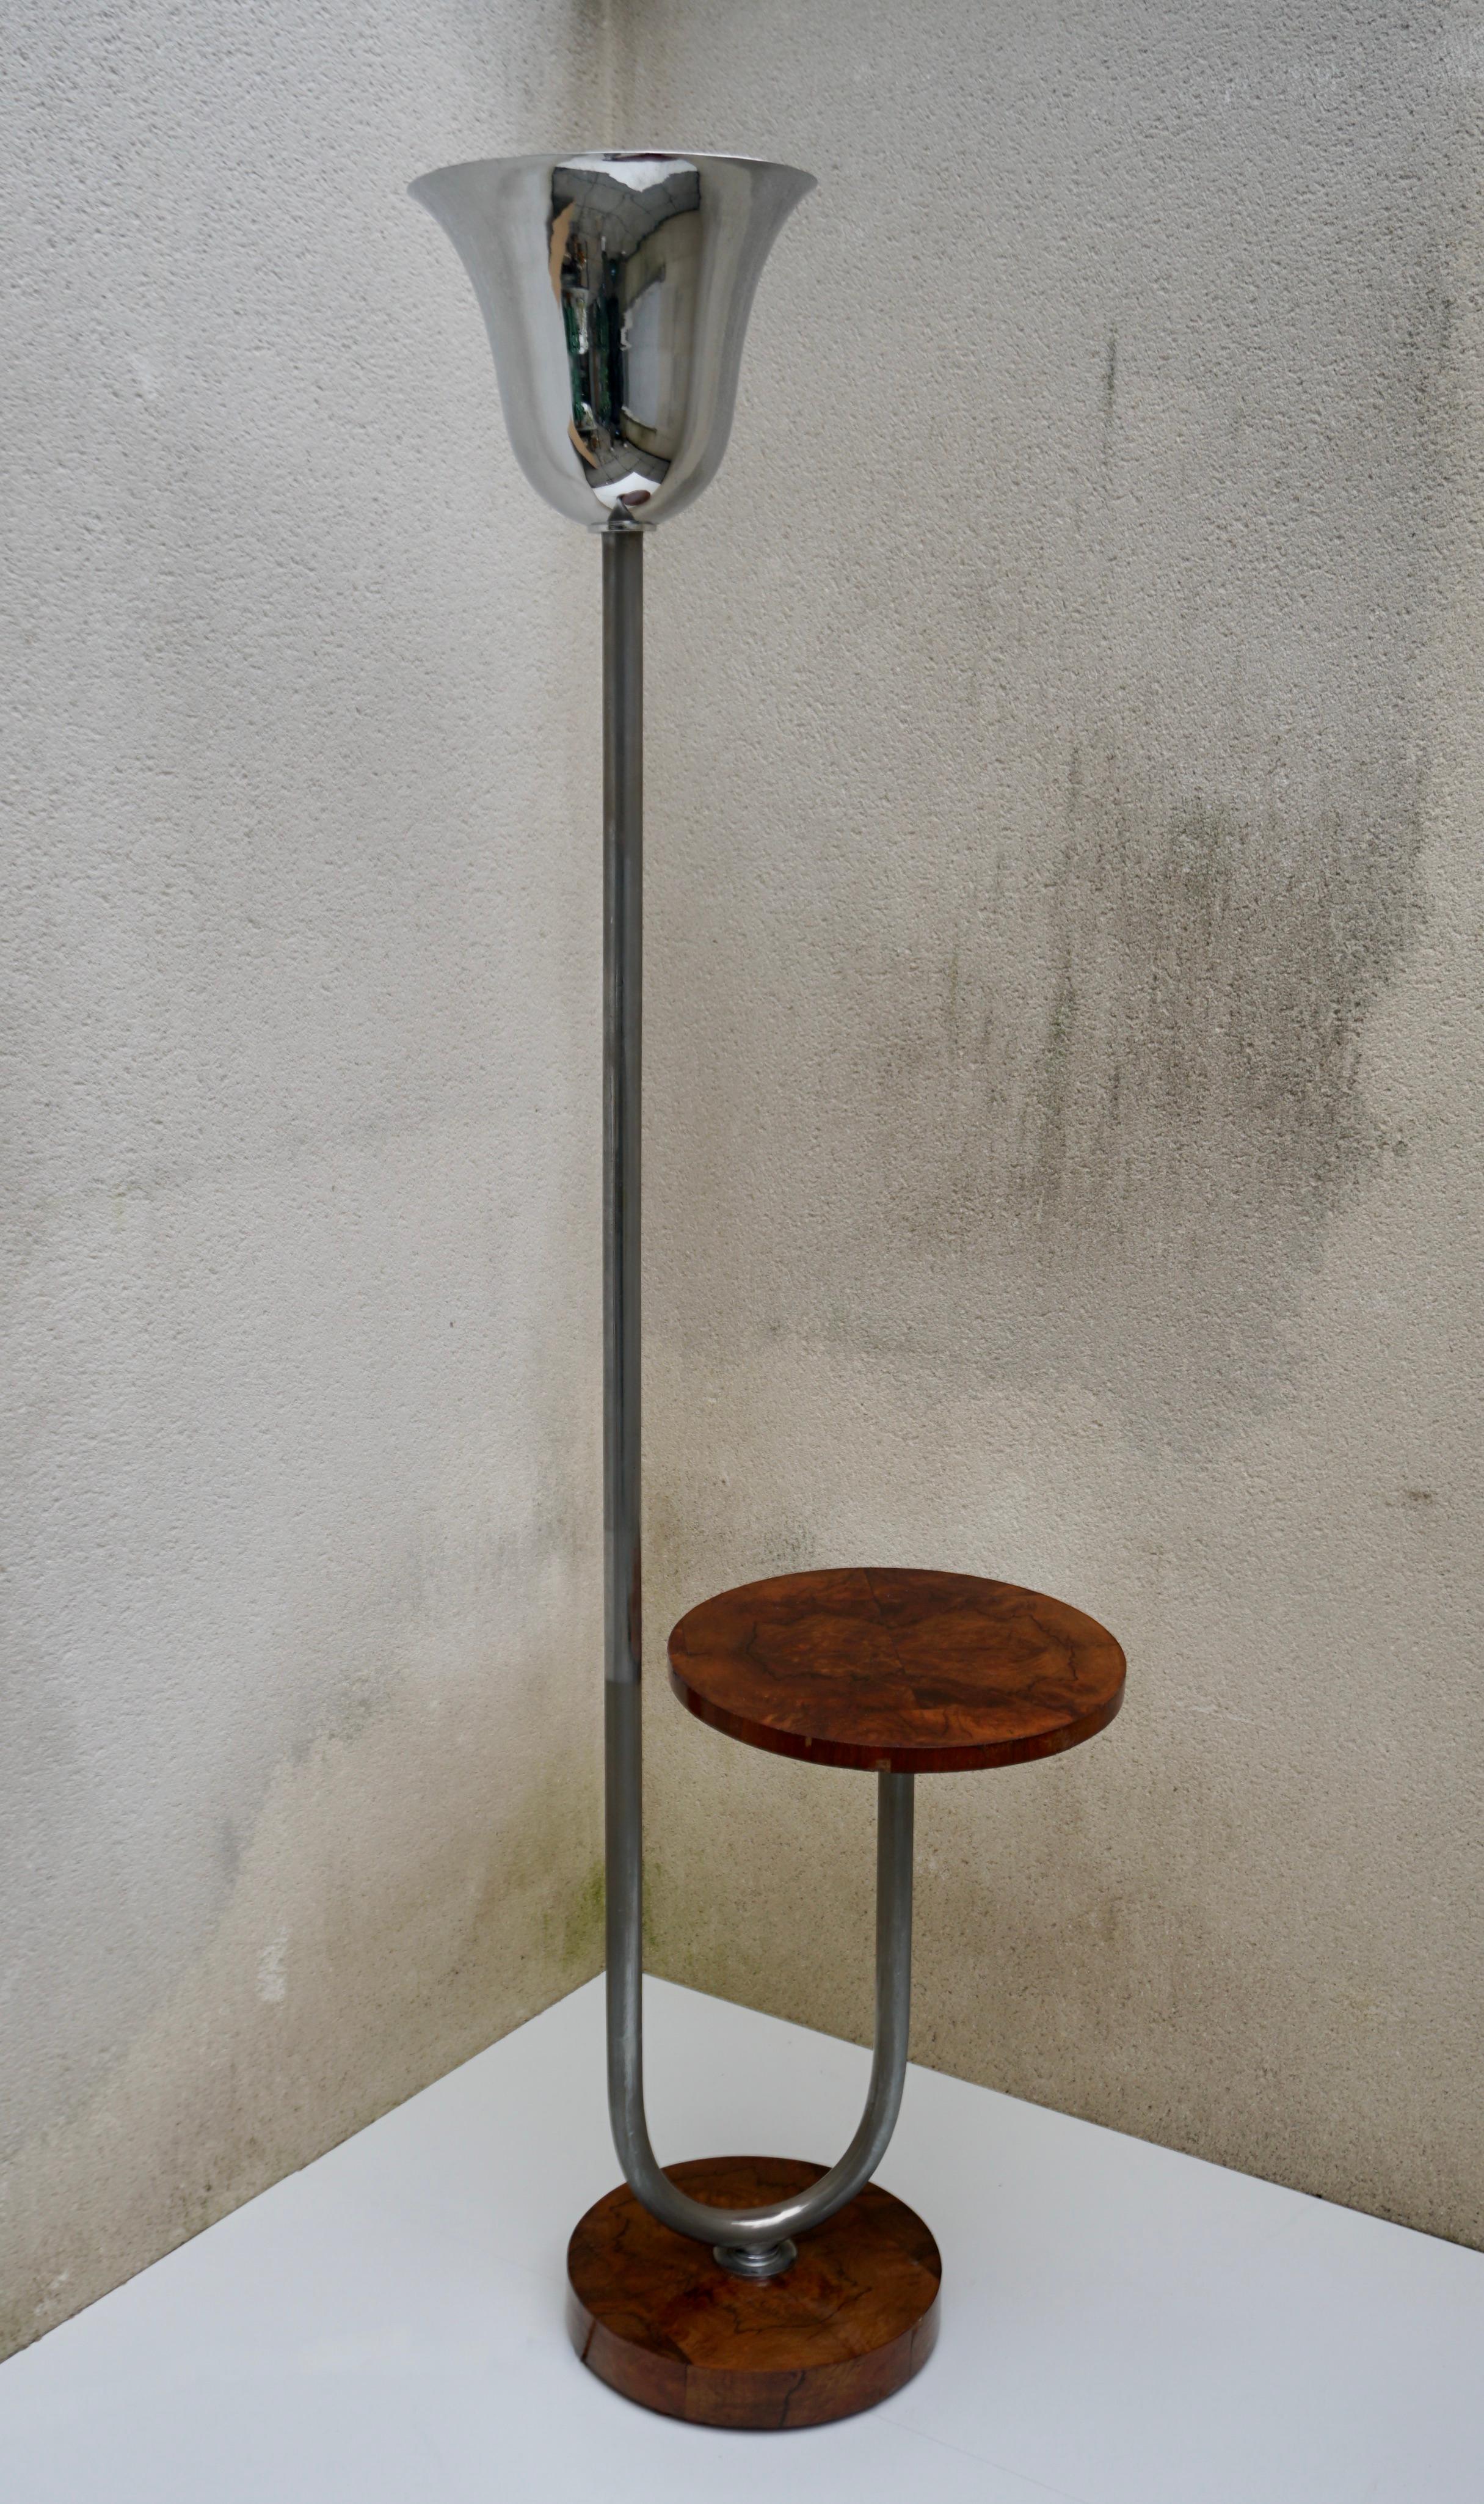 Italian Art Deco Floor Lamp with Table 1930s For Sale